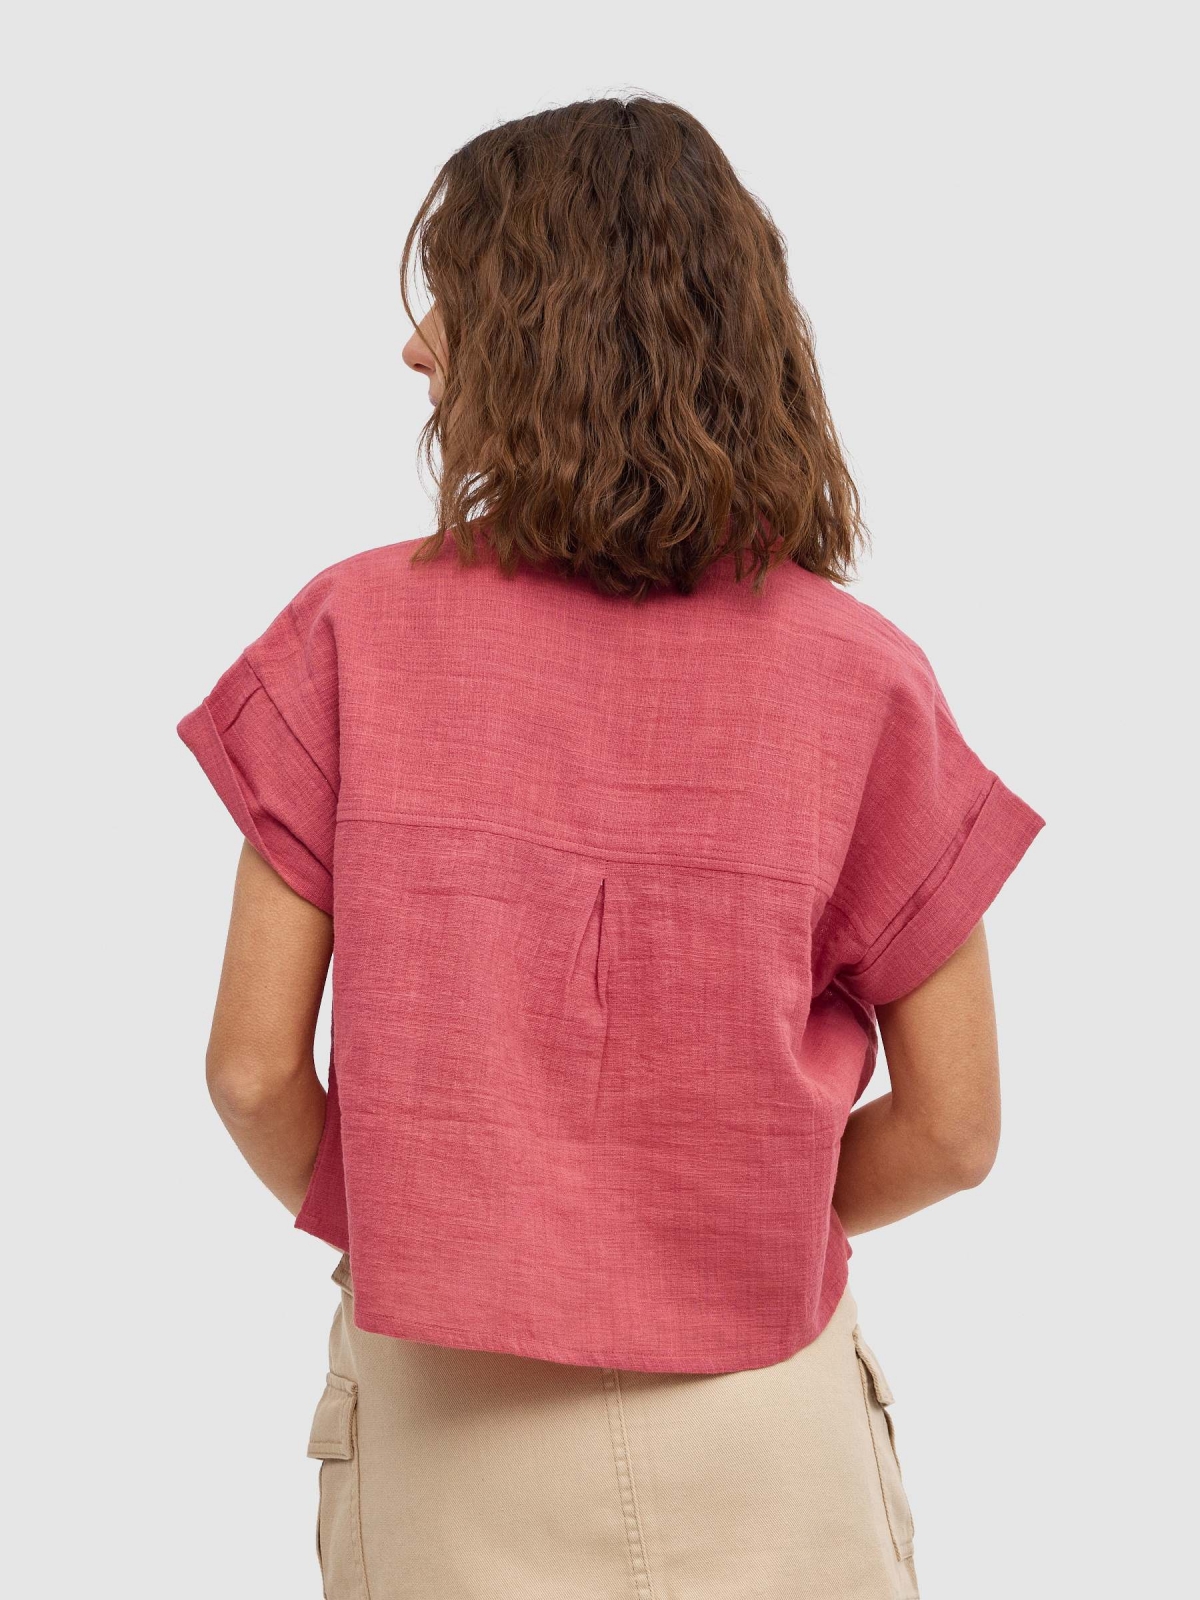 Drop shoulder shirt mineral red middle back view